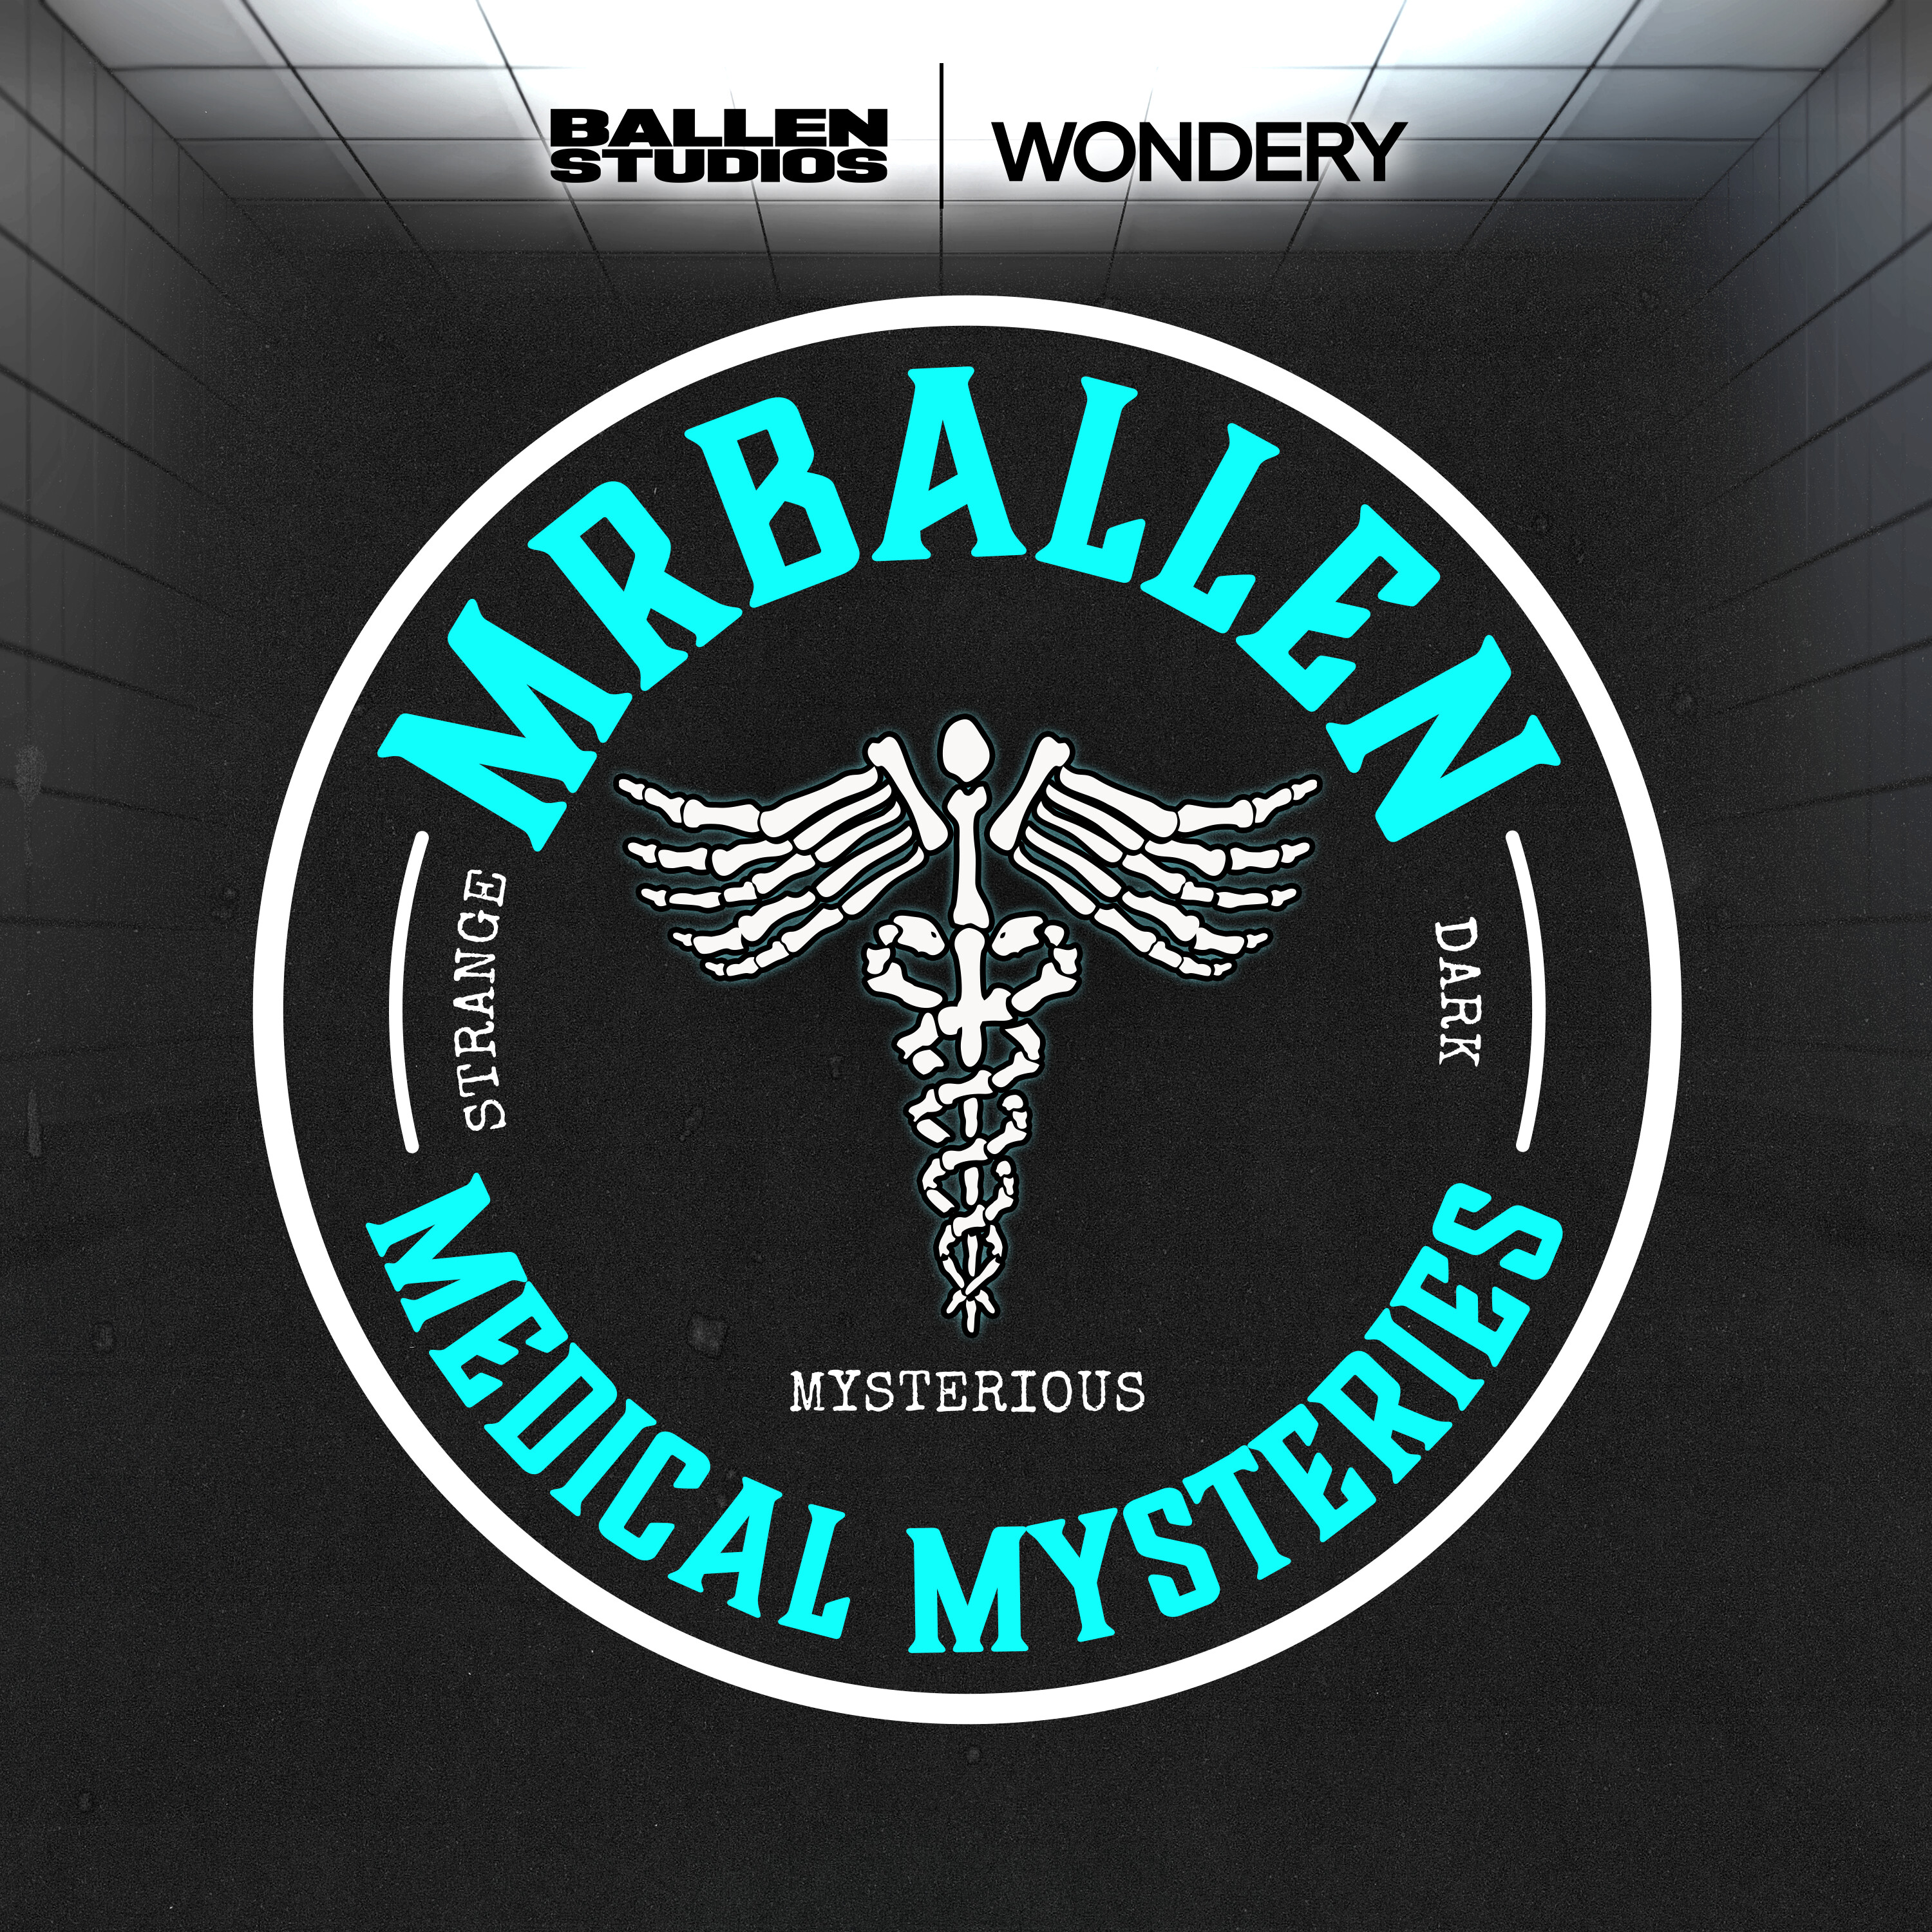 MrBallen’s Medical Mysteries